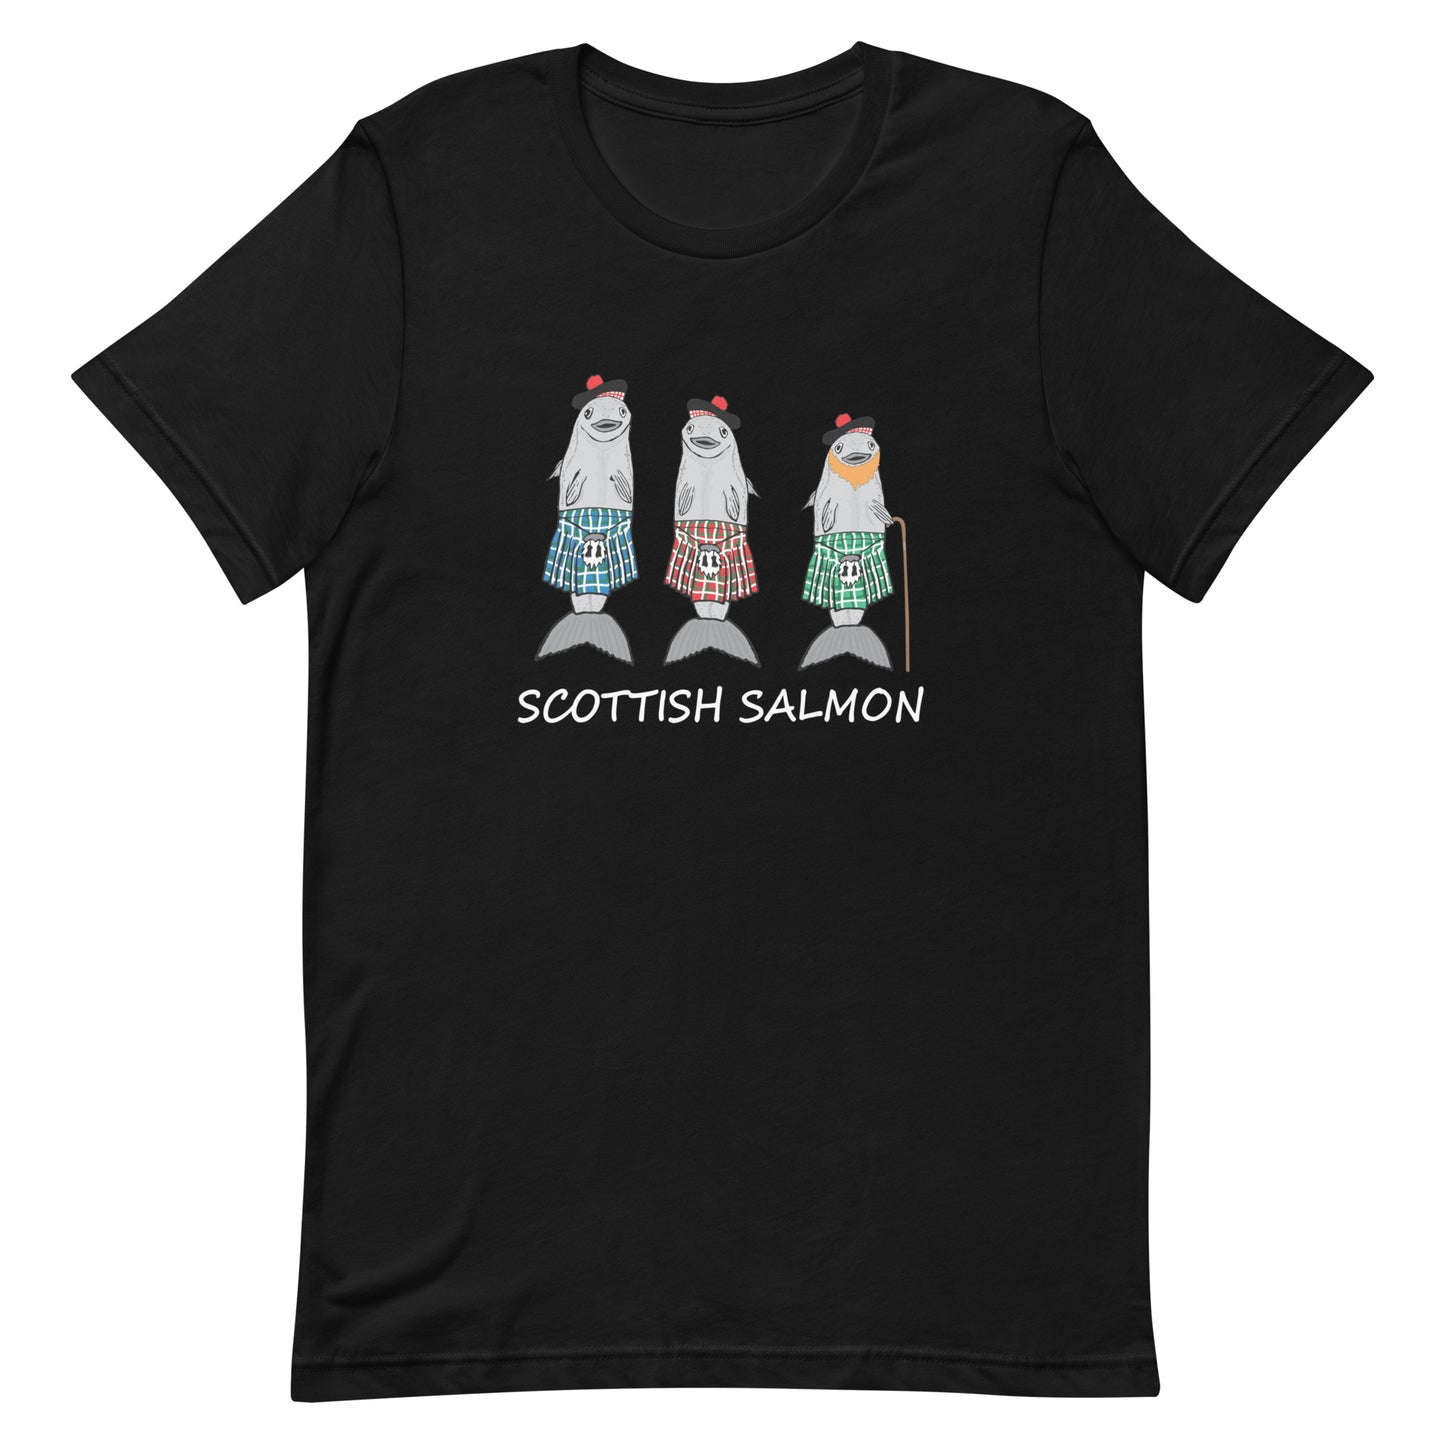 Scottish salmon t-shirt for fish lovers